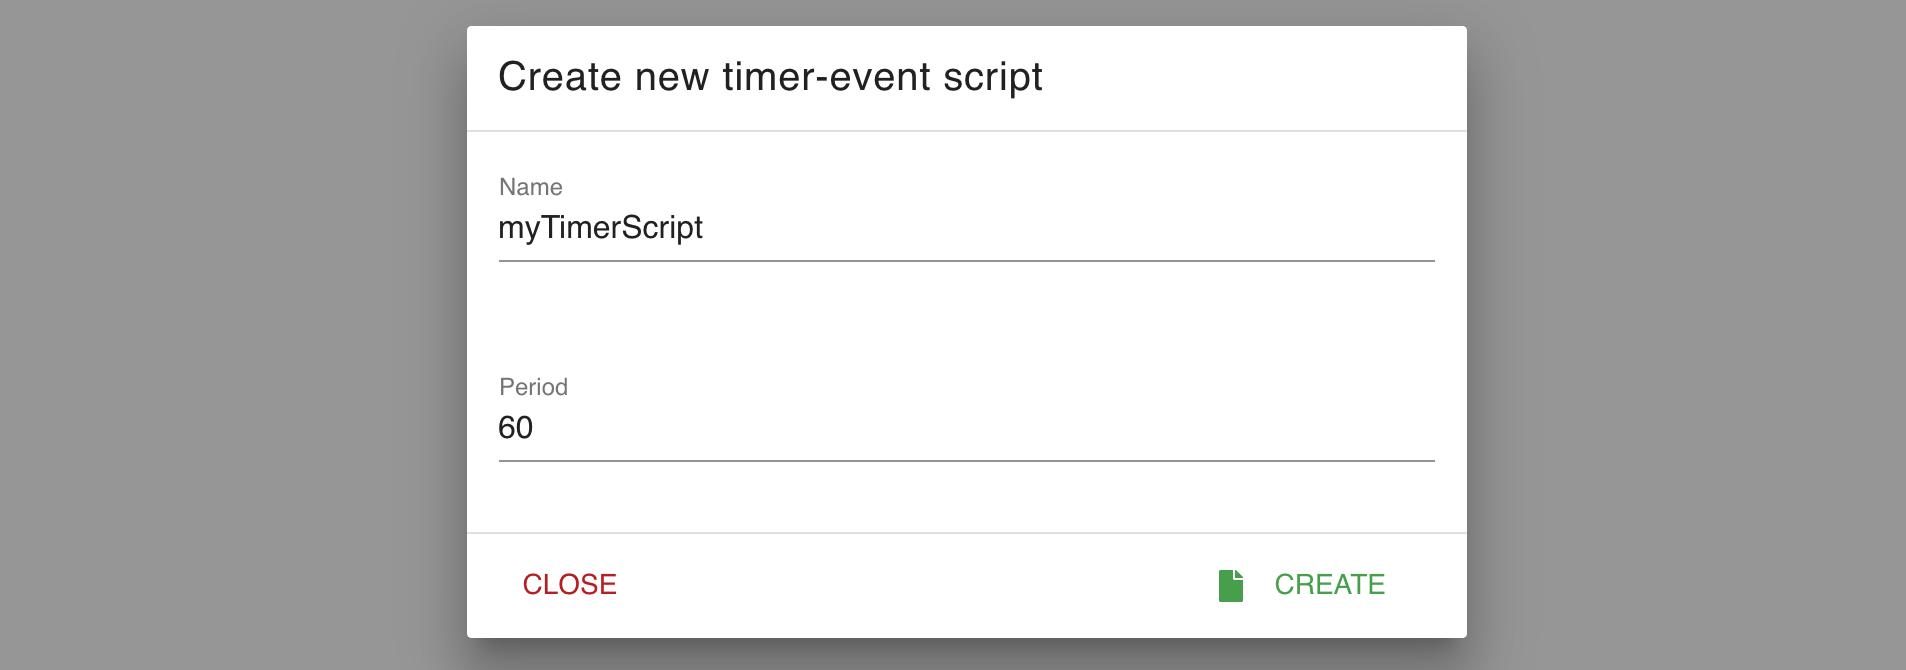 Timer-event script